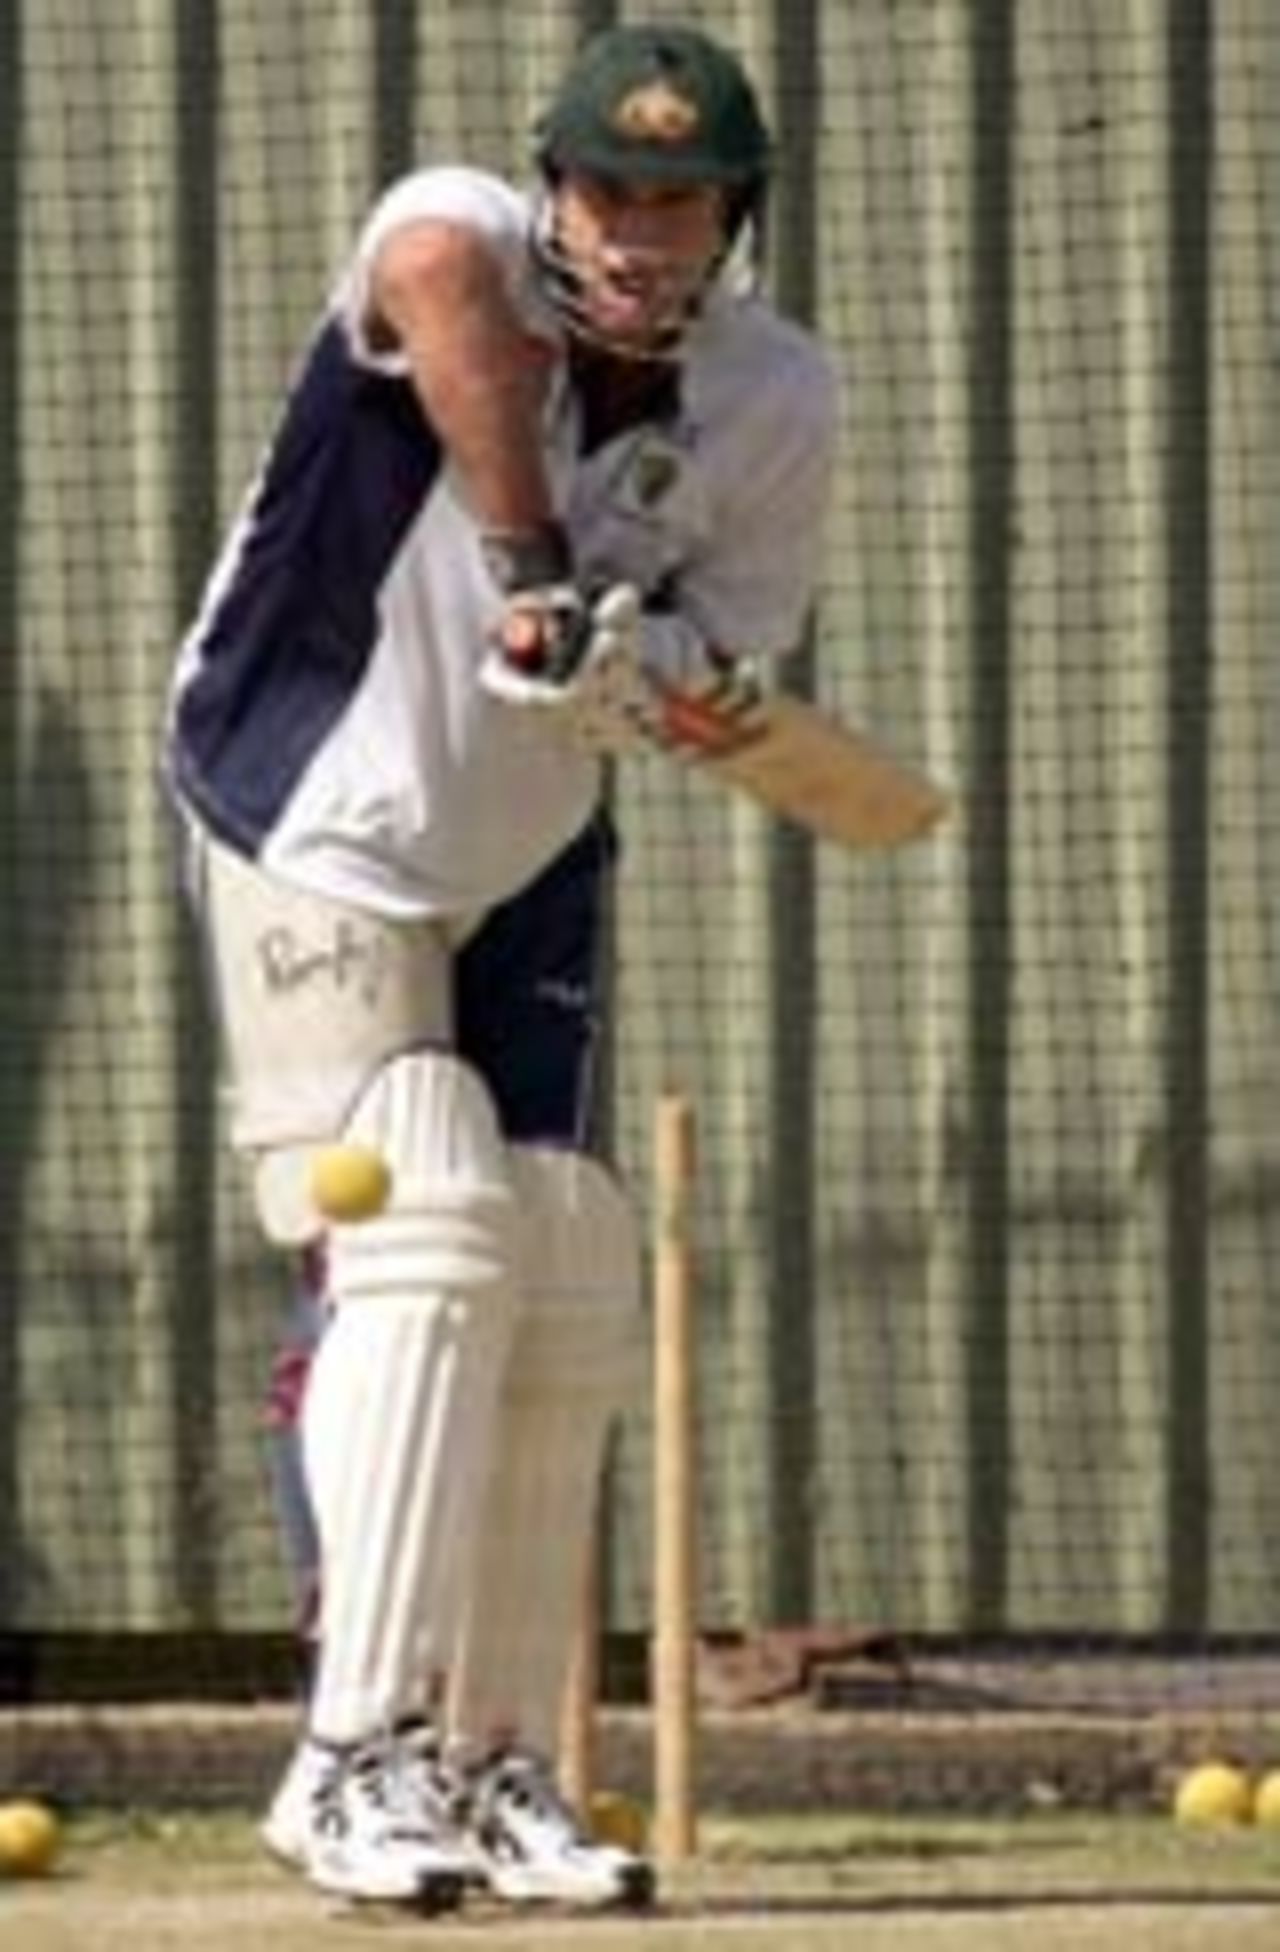 Matthew Hayden batting in the nets, Perth, December 15, 2004